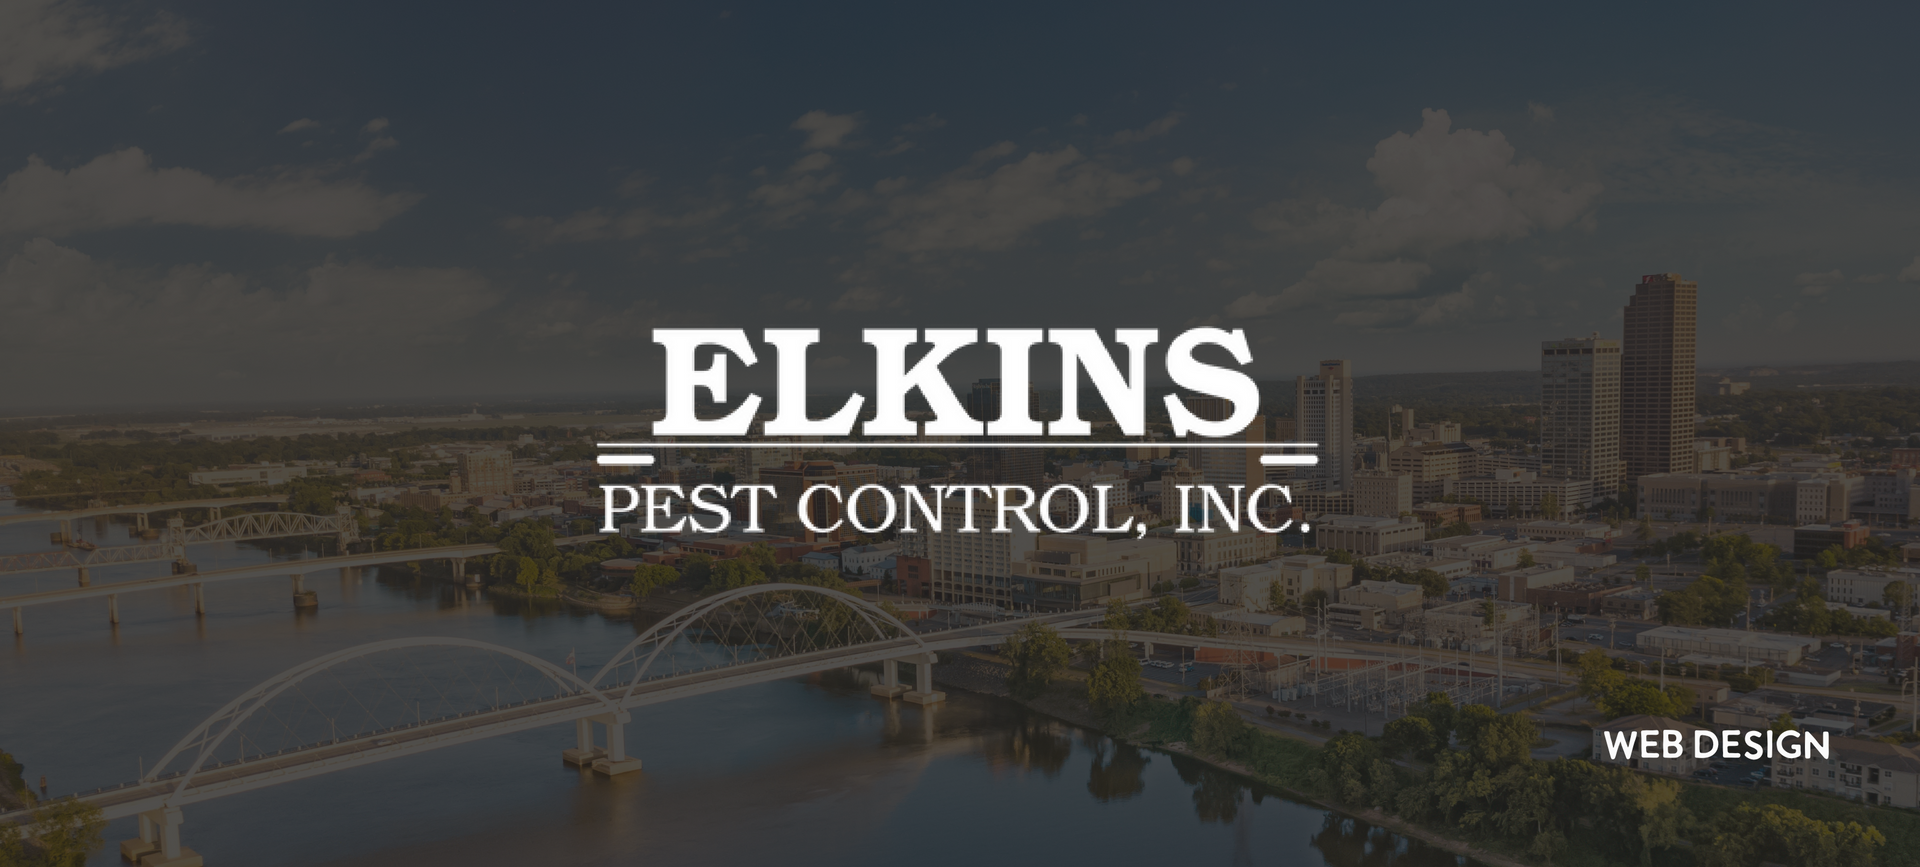 elkins pest control little rock build a new website building how to make a website